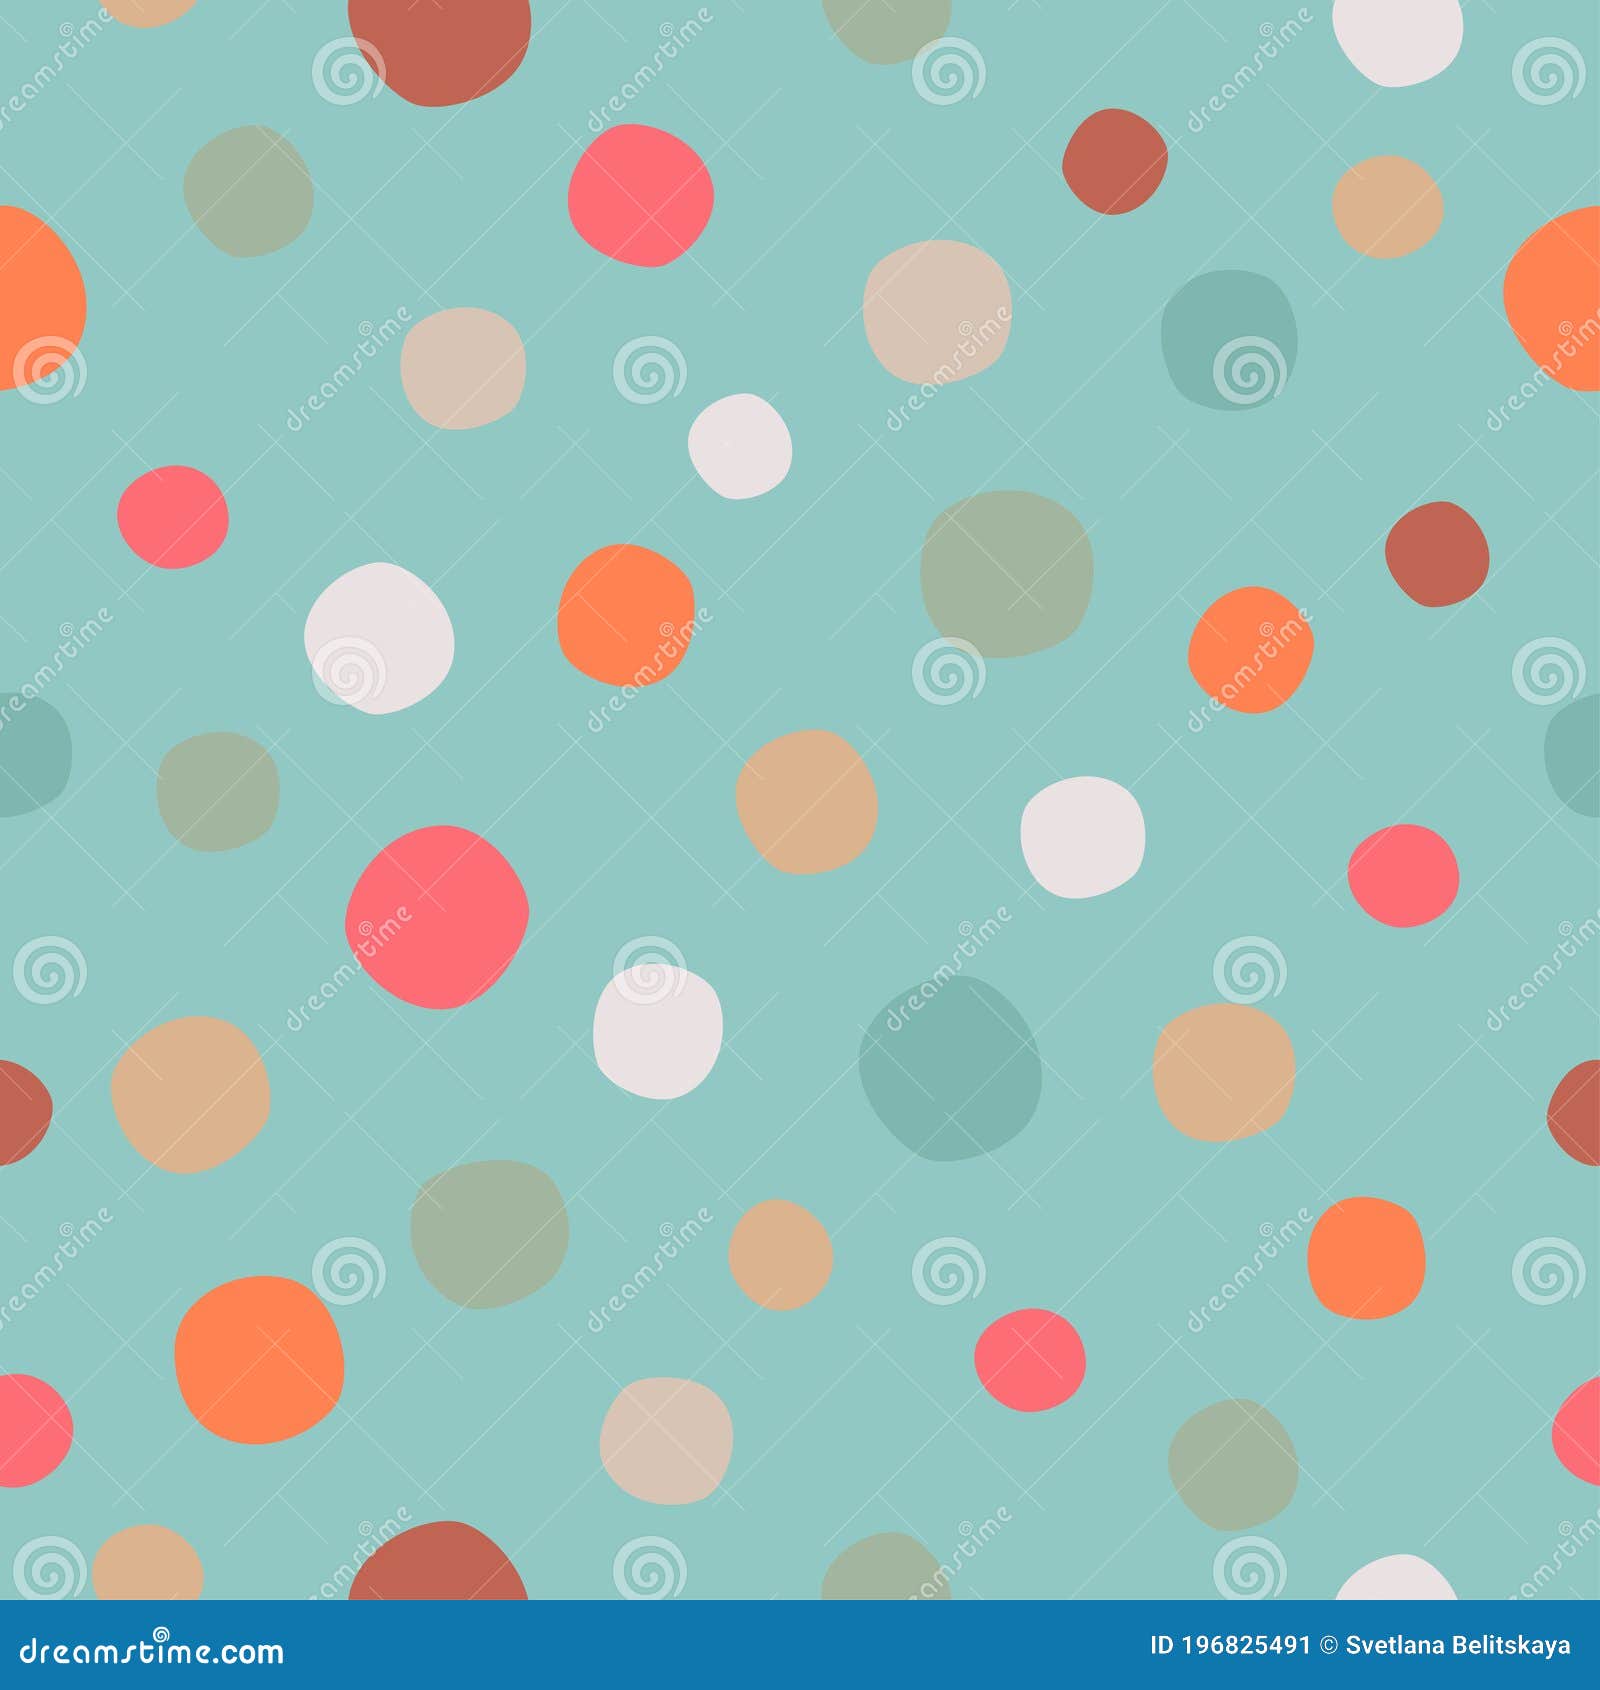 pattern polka dots on sea blue